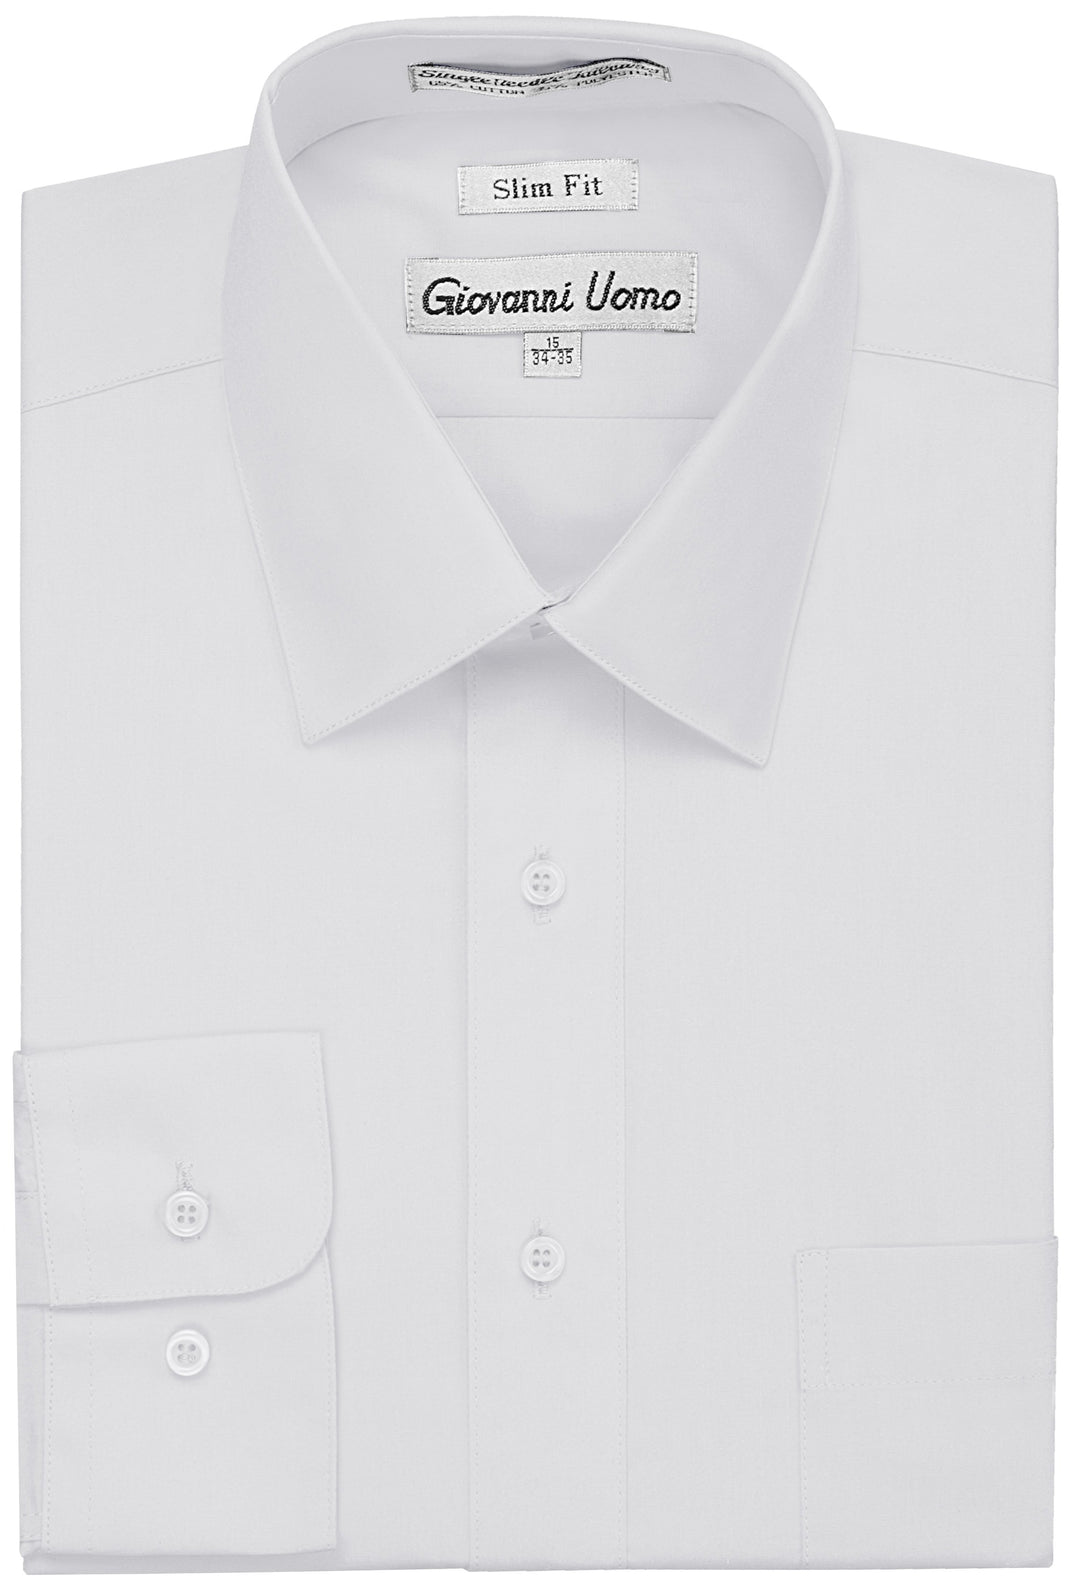 Gentlemens Collection Men's Slim  Fit Long Sleeve Solid Dress Shirt